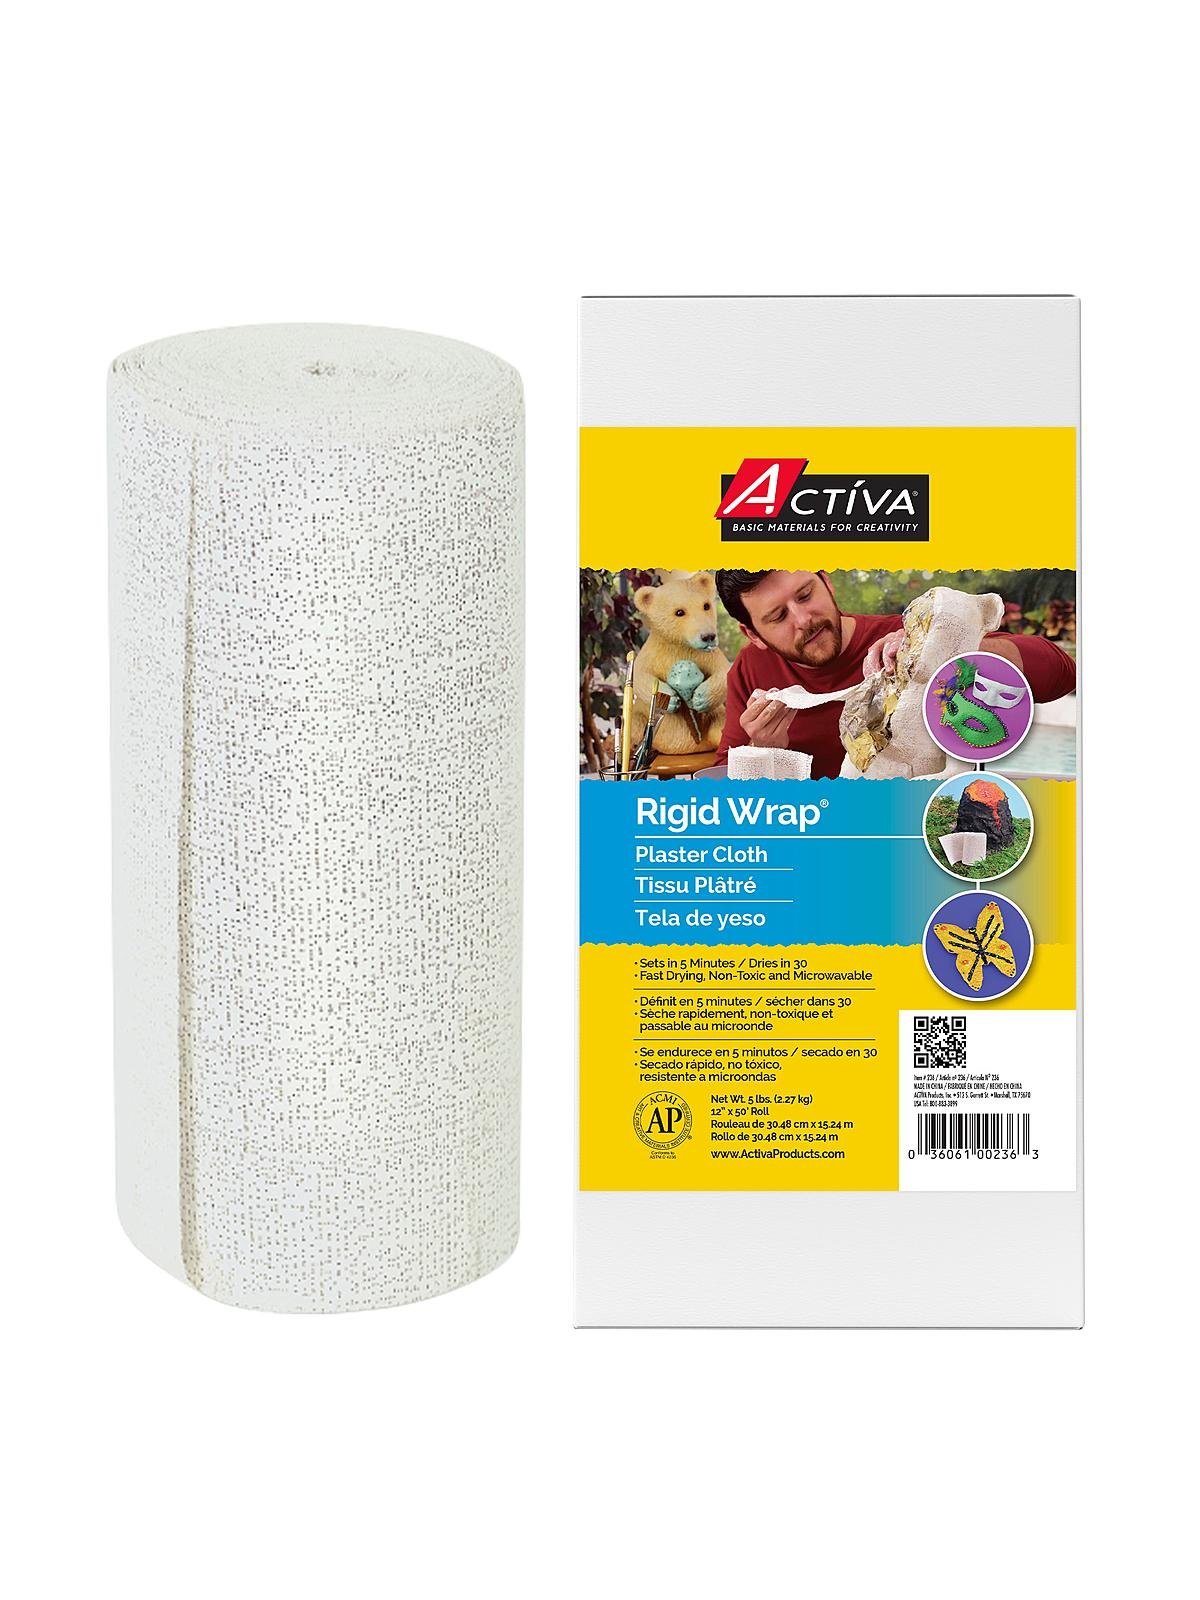 Activa Products - Rigid Wrap Plaster Cloth